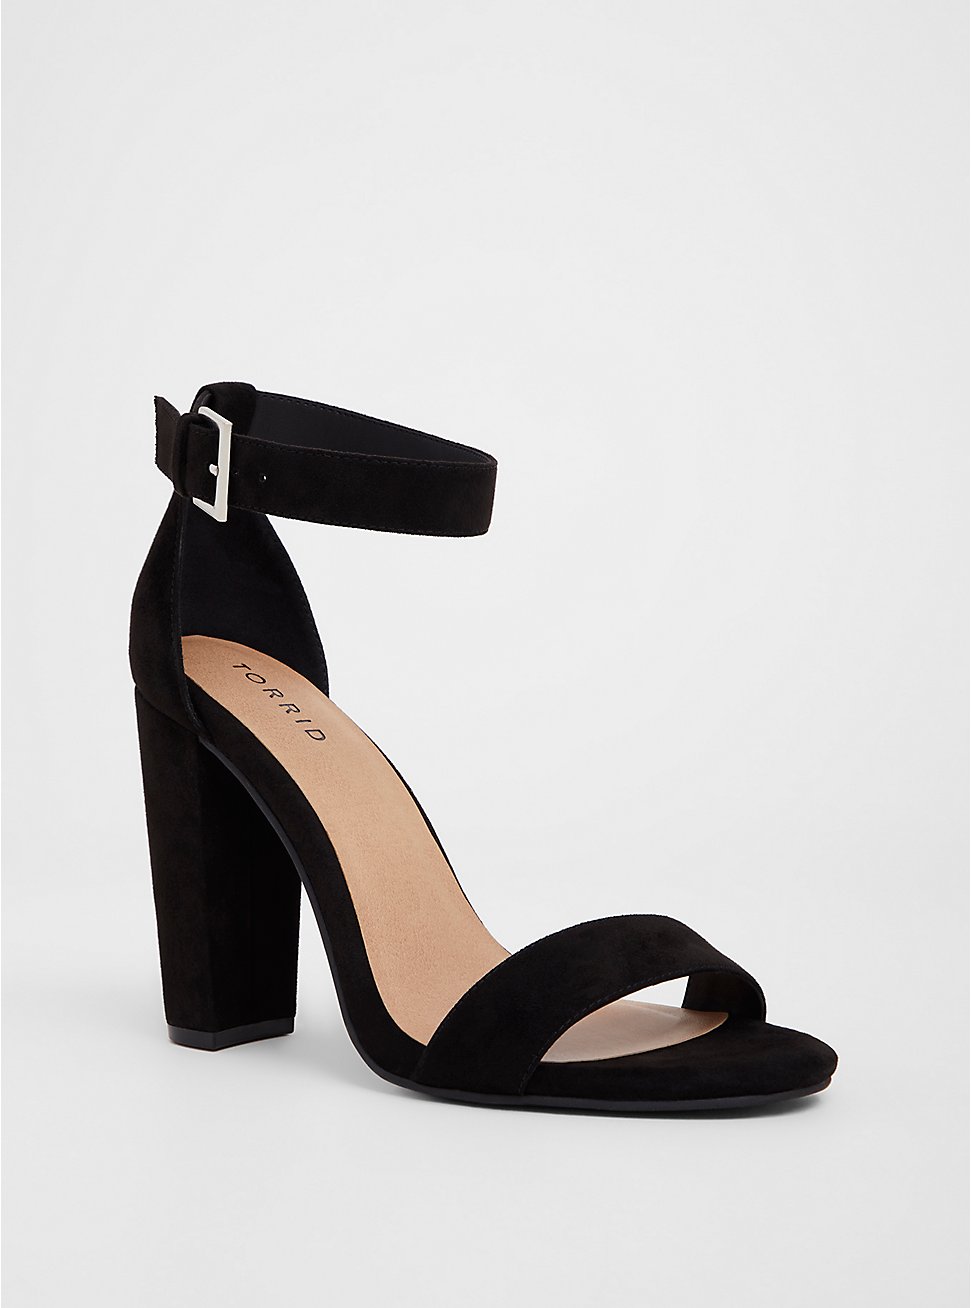 Black Ankle Strap Heel Sandal (Wide Width) - Plus Size | Torrid